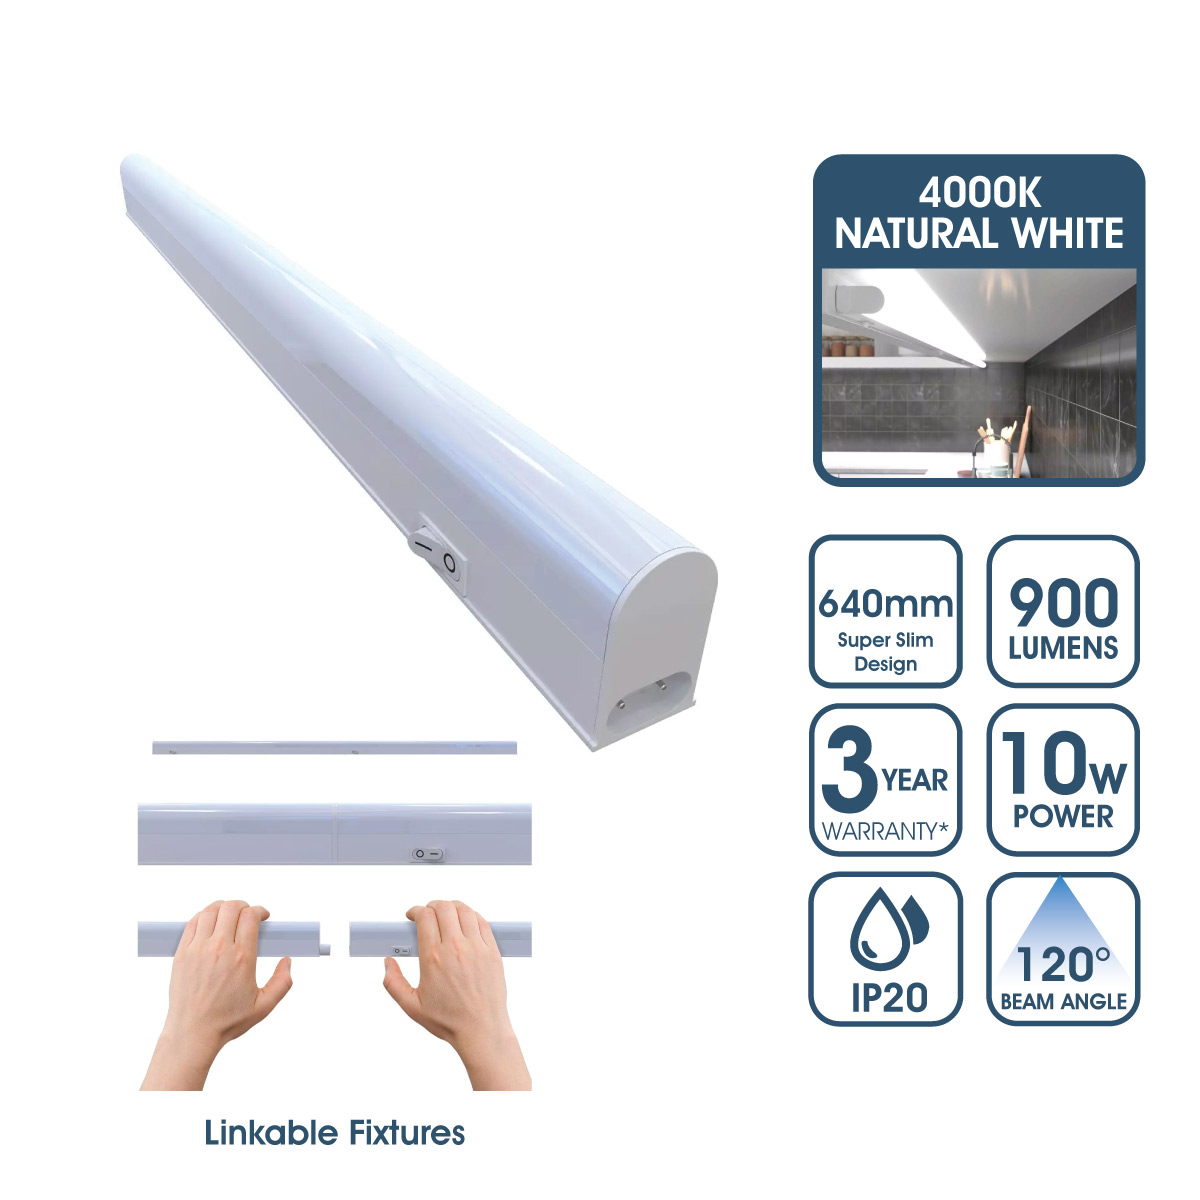 View 640mm Linkable LED Ultraslim Under Cabinet Light Fitting Natural White information